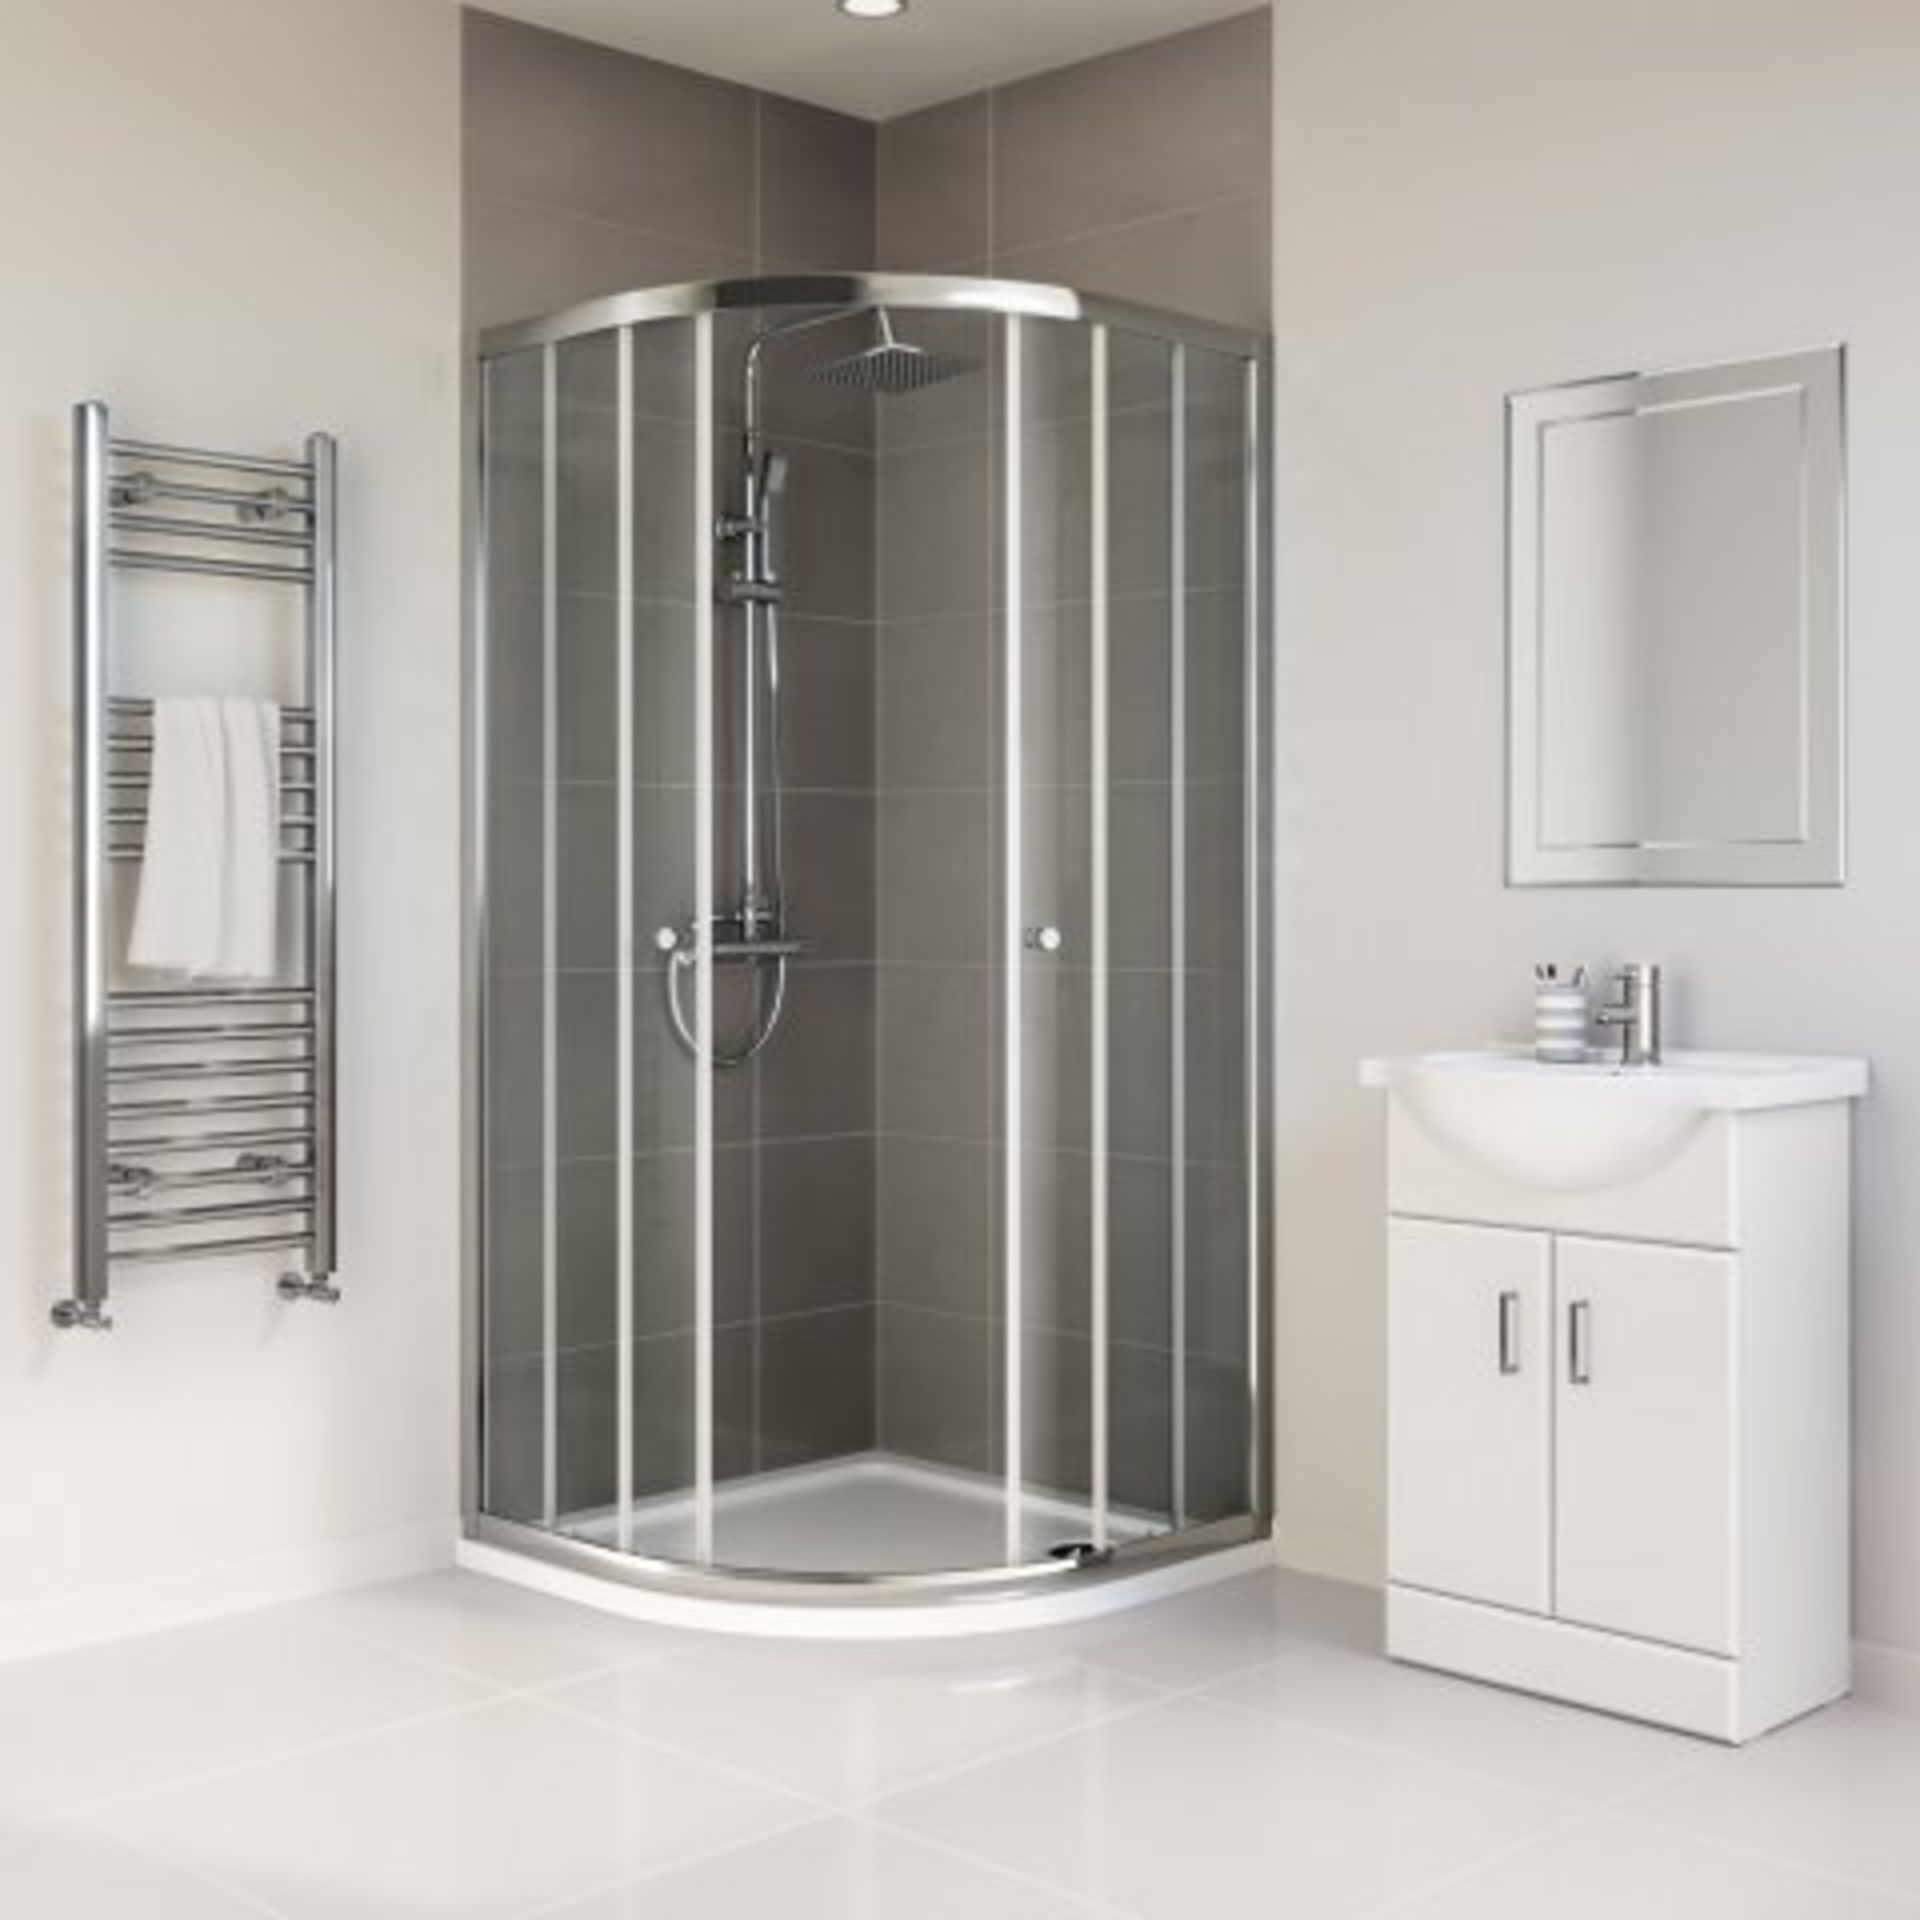 (P263) 900x900mm - Elements Quadrant Shower Enclosure. RRP £299.99. Budget Solution Our entry - Image 4 of 5